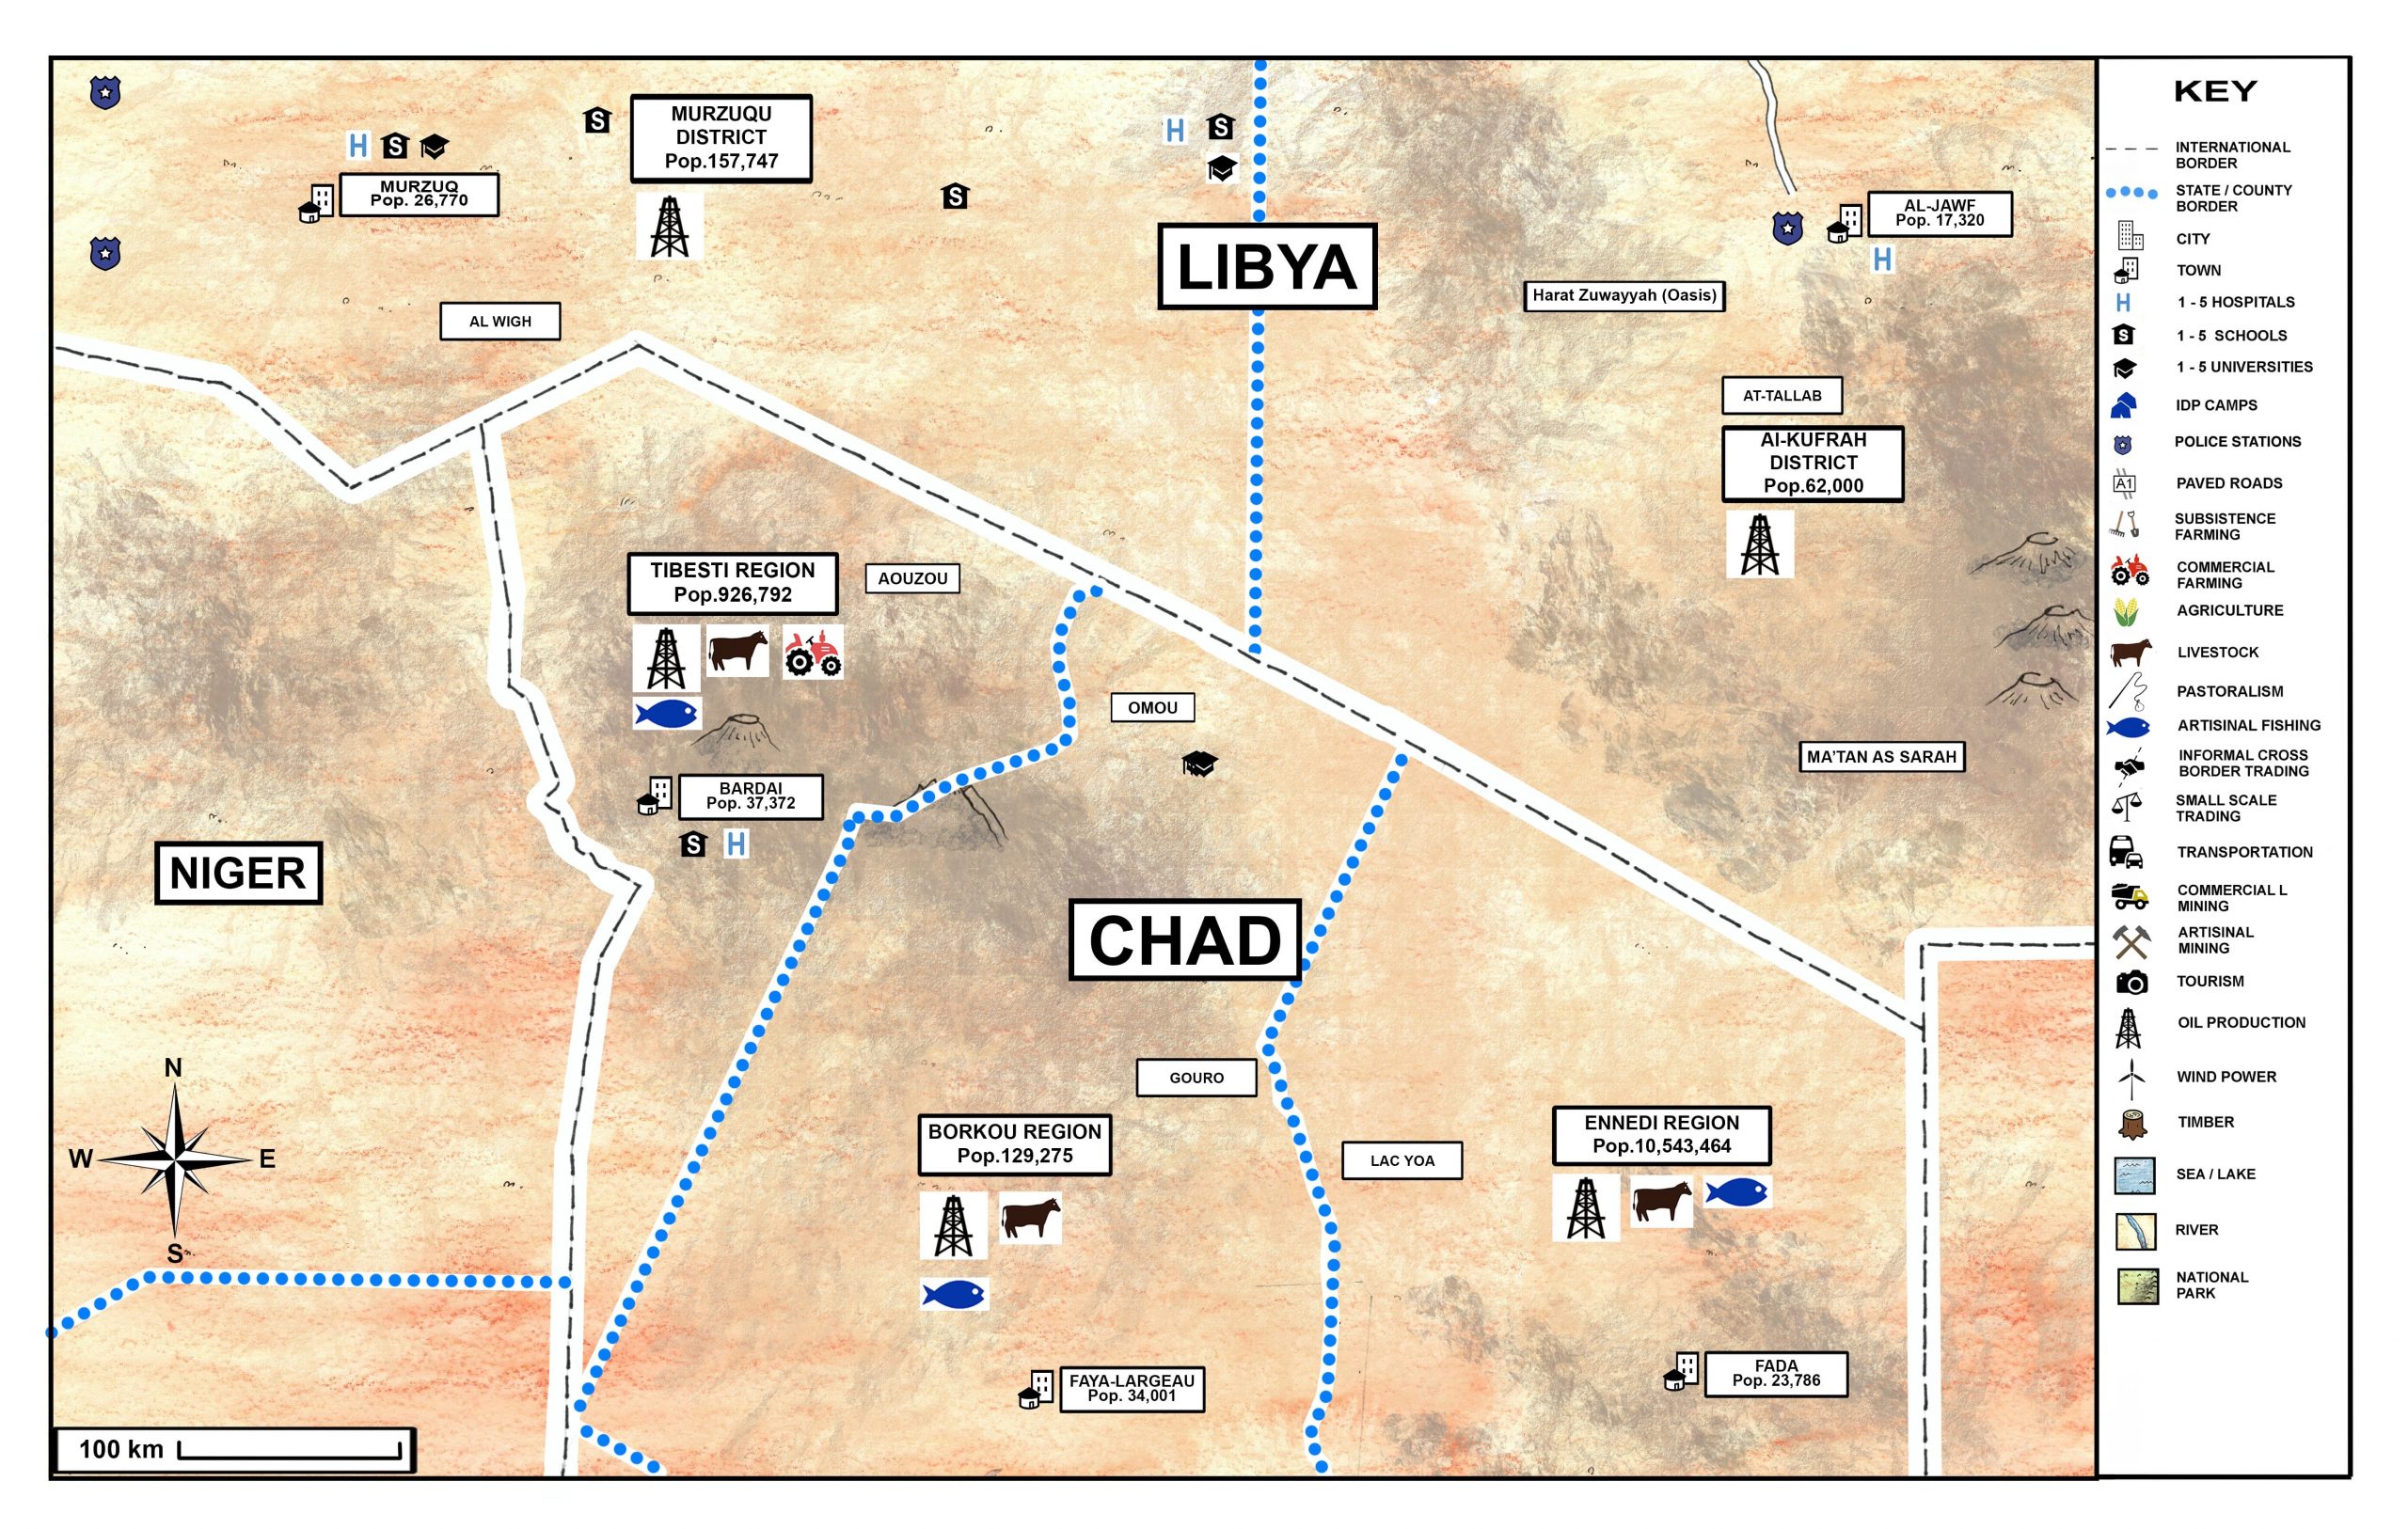 CHAD - LIBYA_illustration